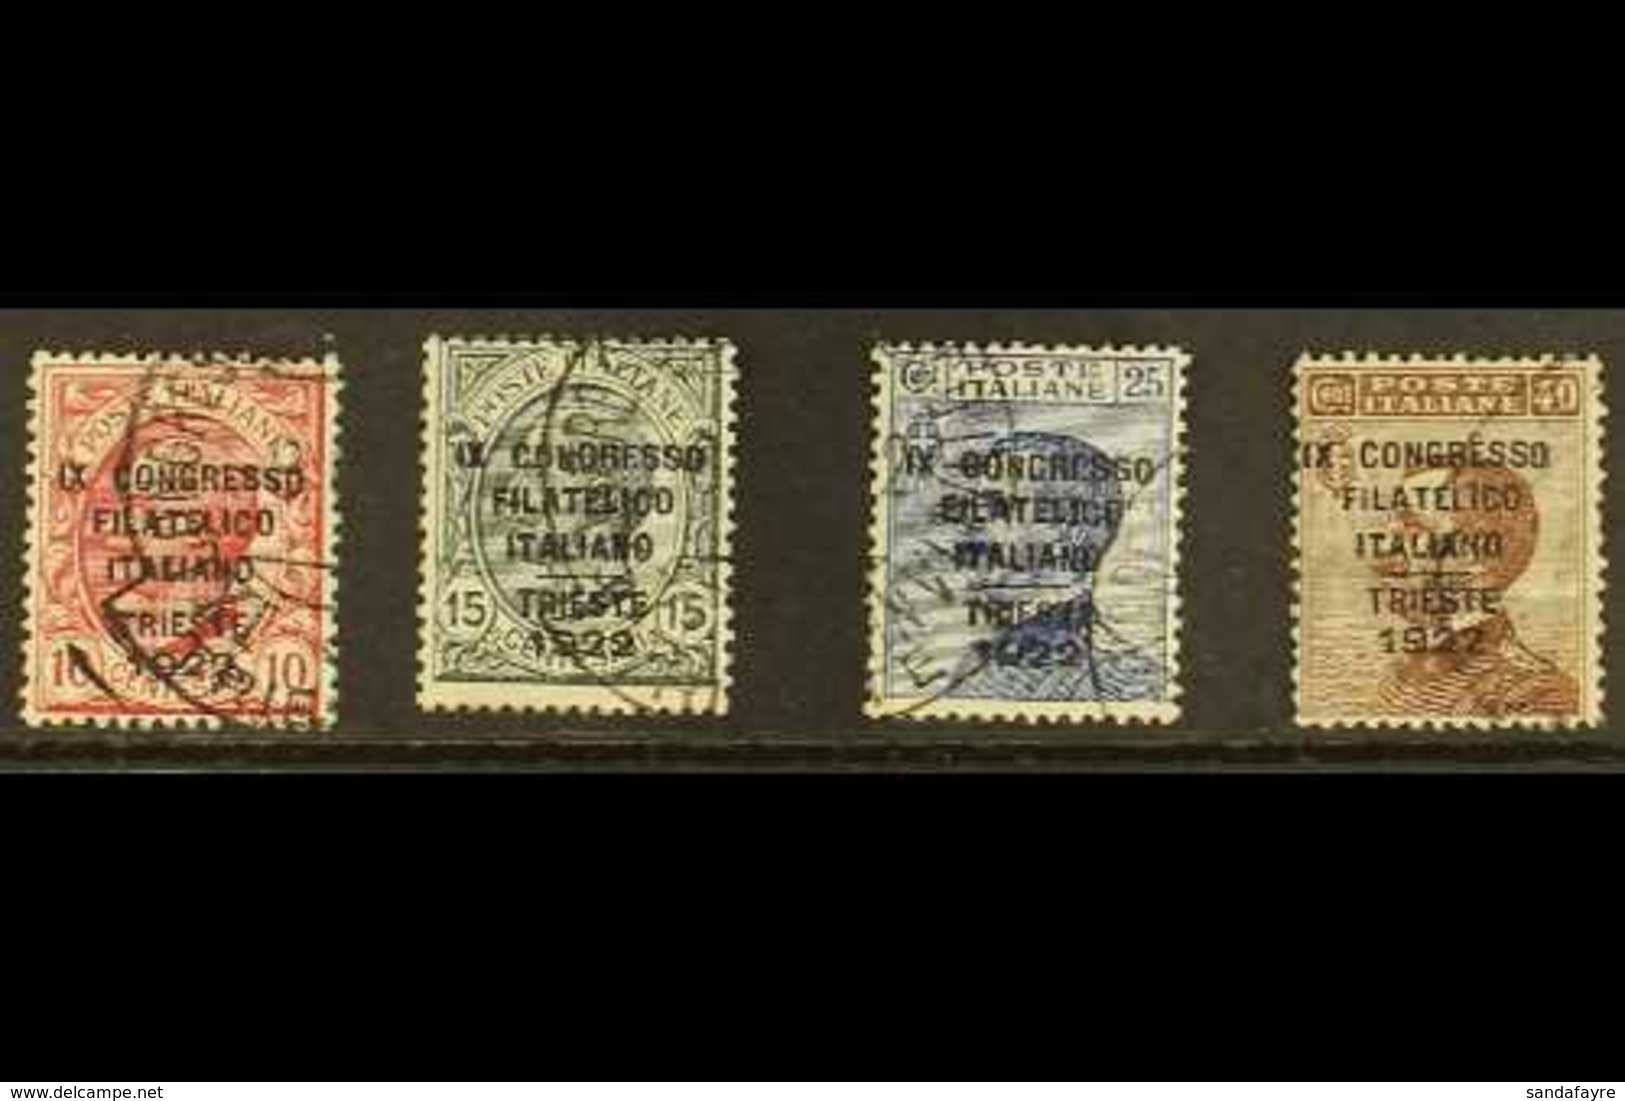 1922 Ninth Italian Philatelic Congress (Trieste) Complete Set (Sass S. 22, SG 122/25) Fine Used. (4 Stamps) For More Ima - Non Classificati